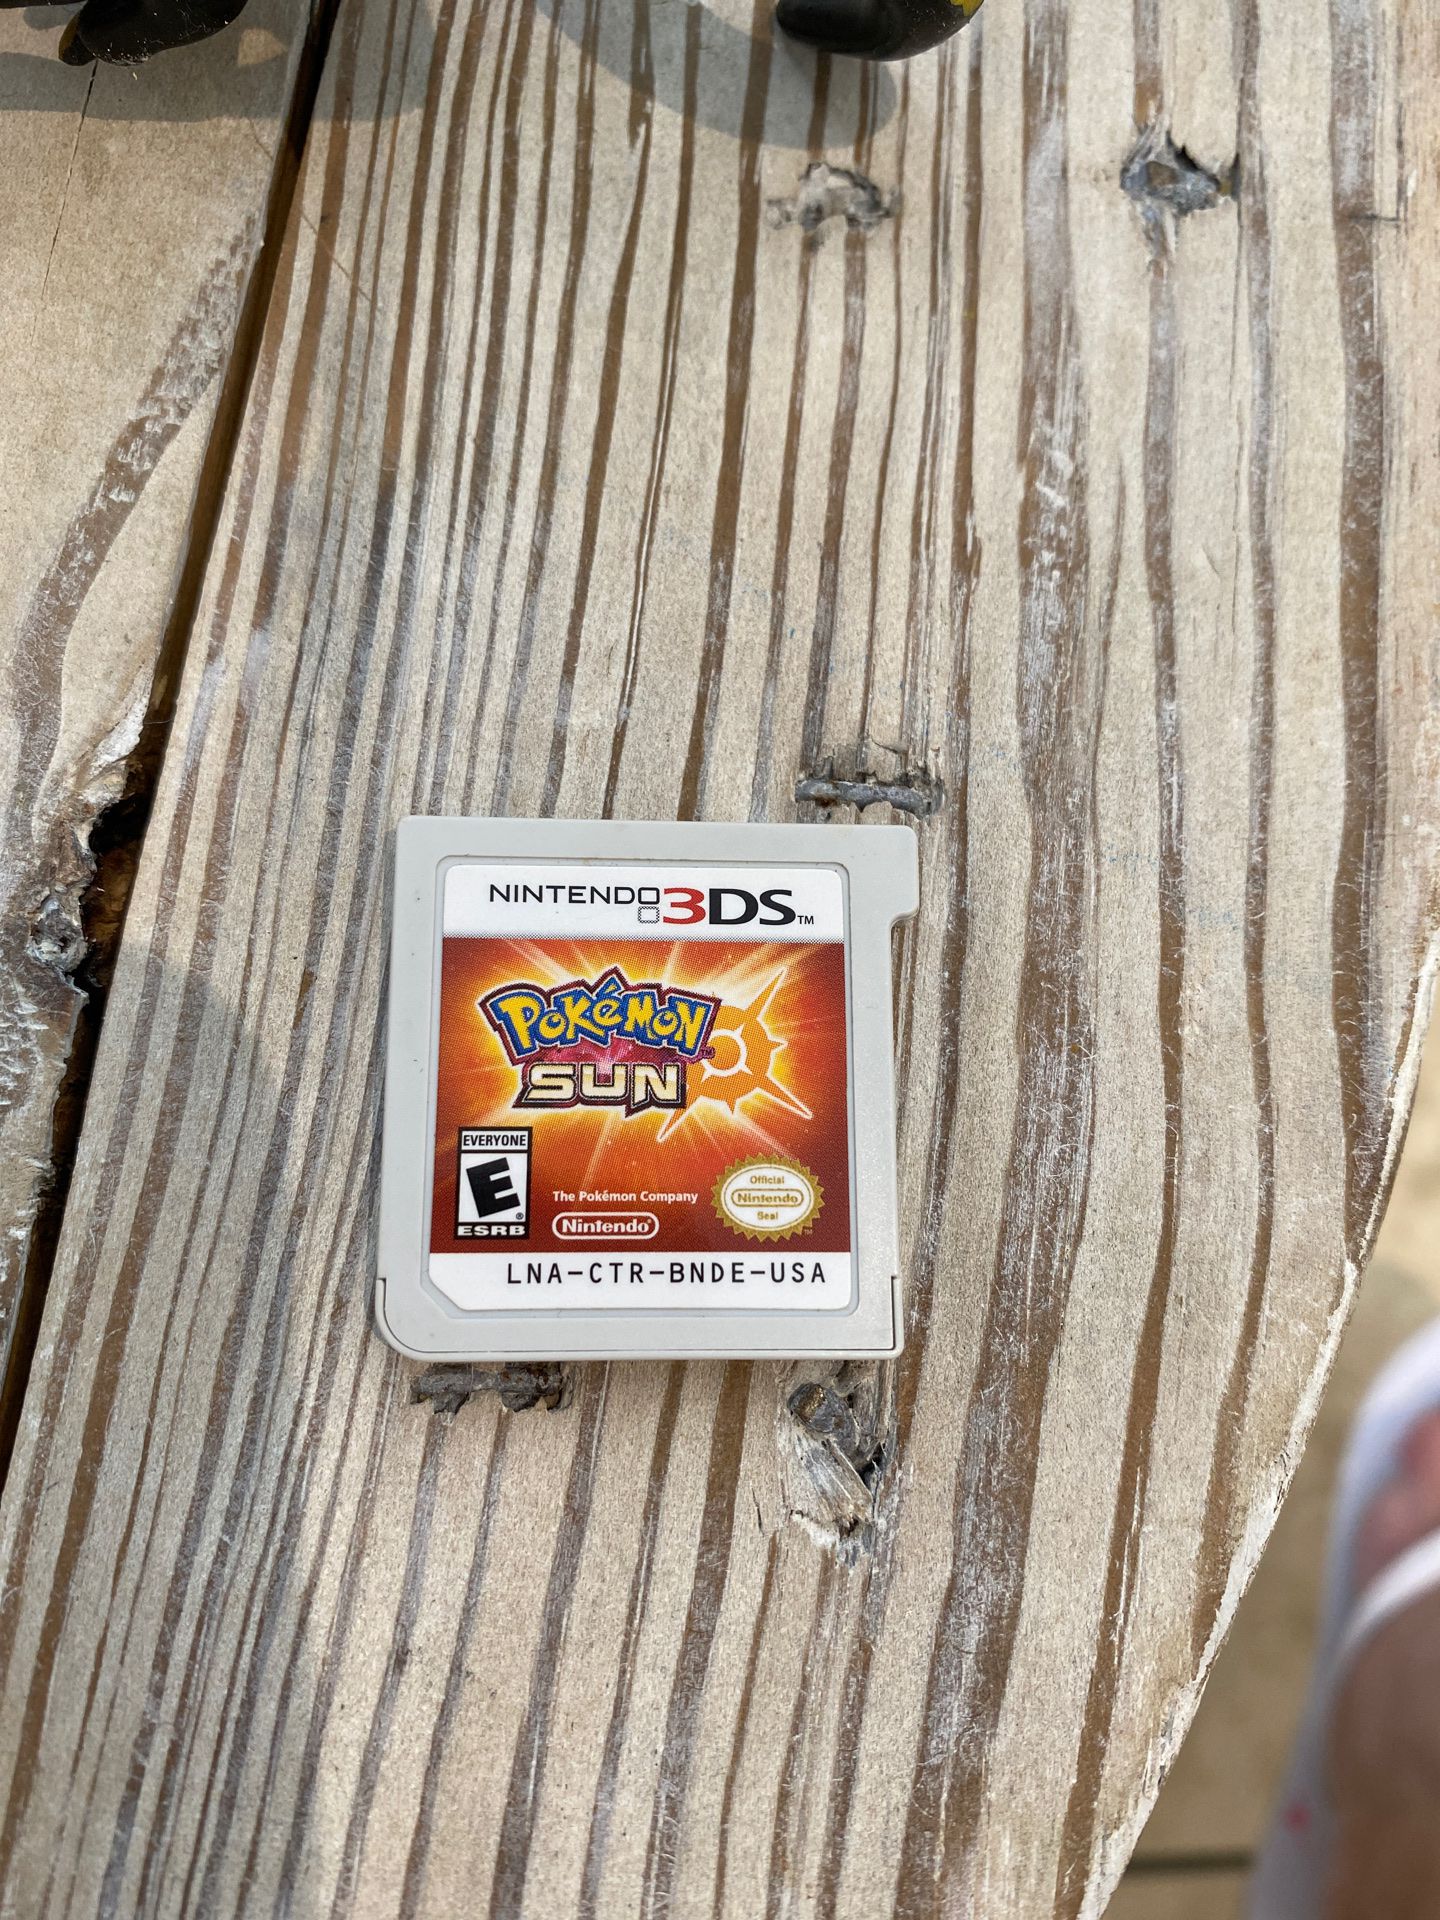 Nintendo 3DS Pokémon sun game